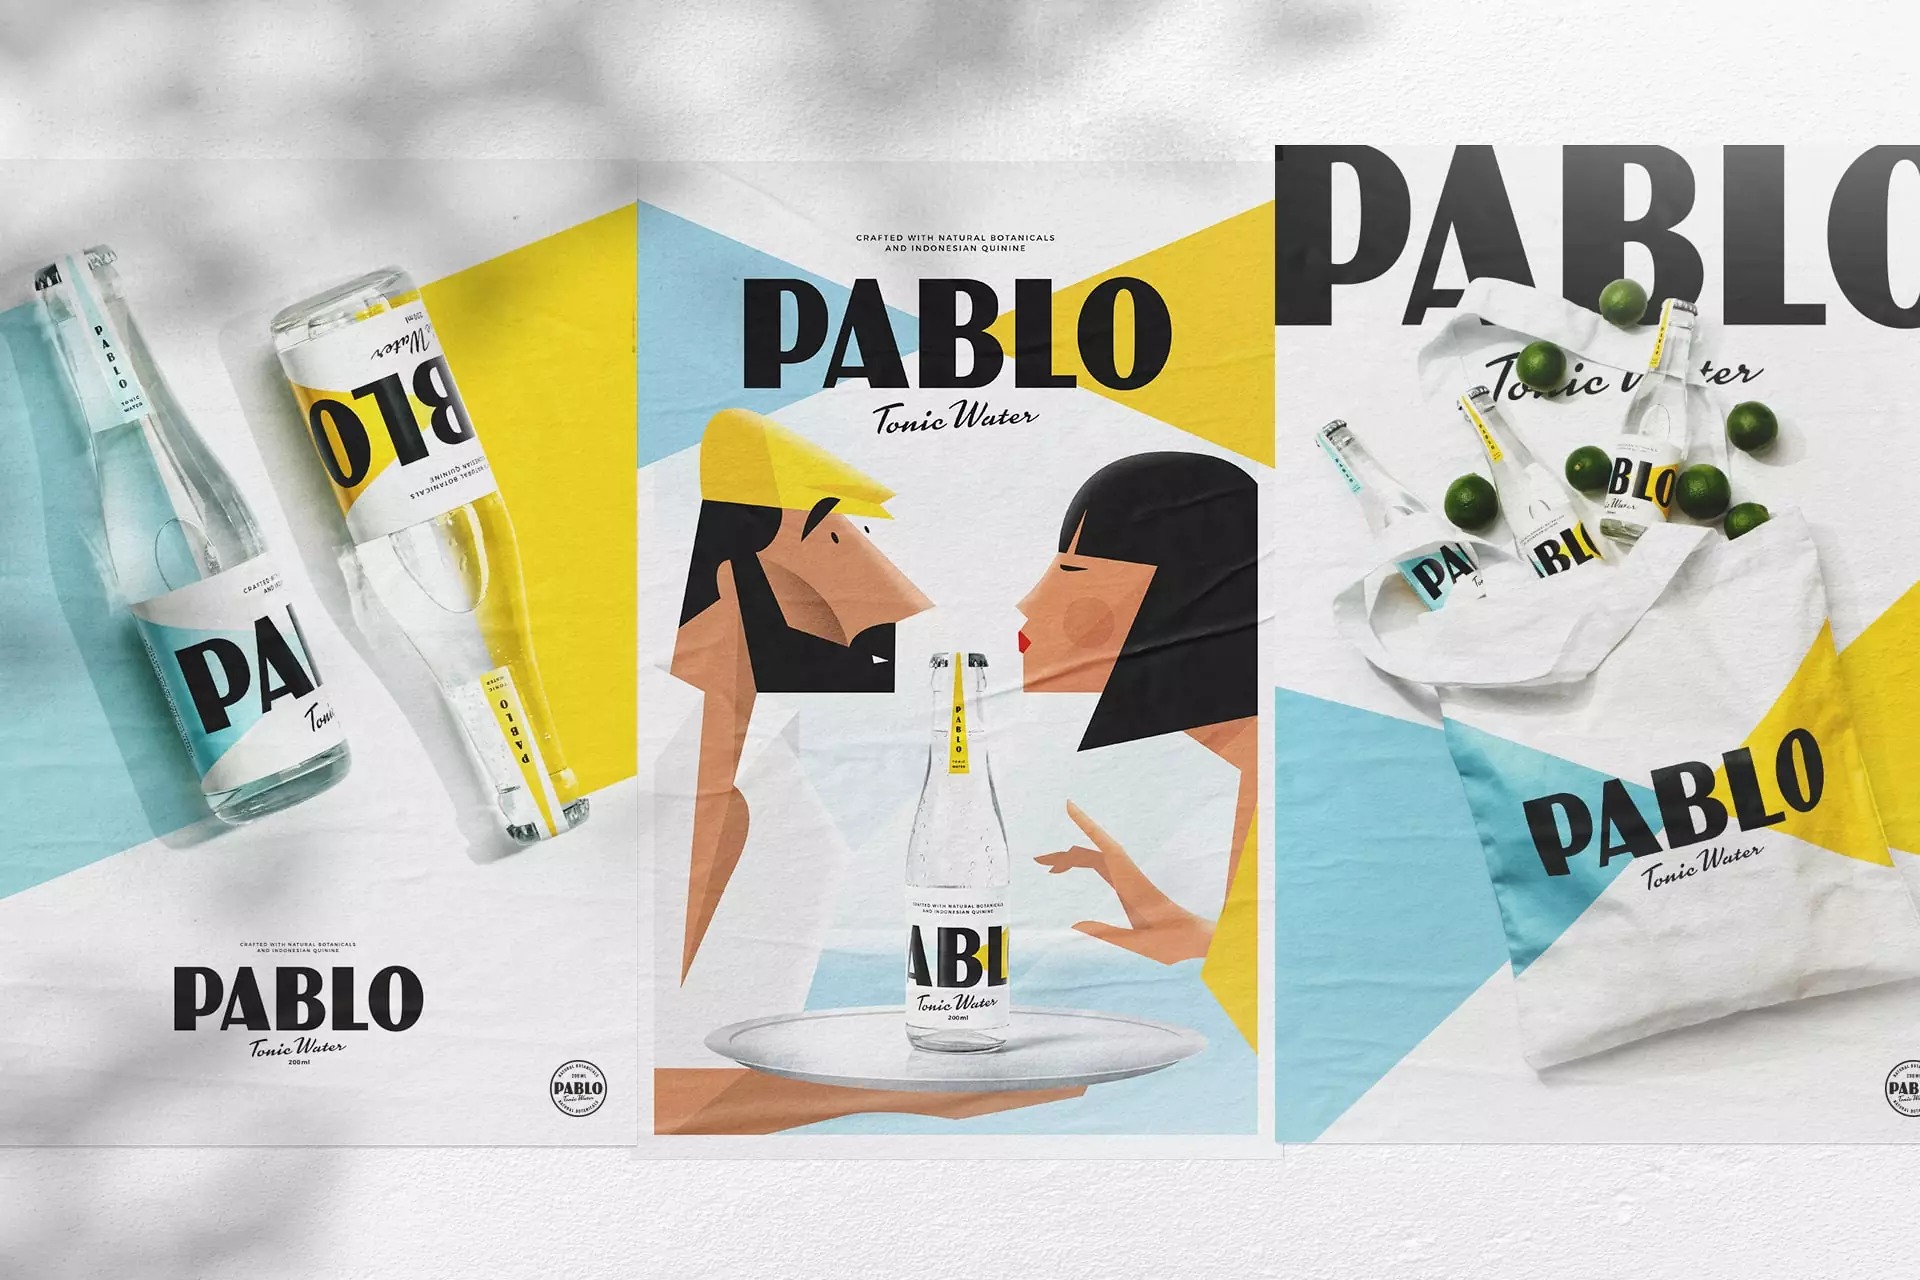 Pablo Tonic Water汤力水包装设计